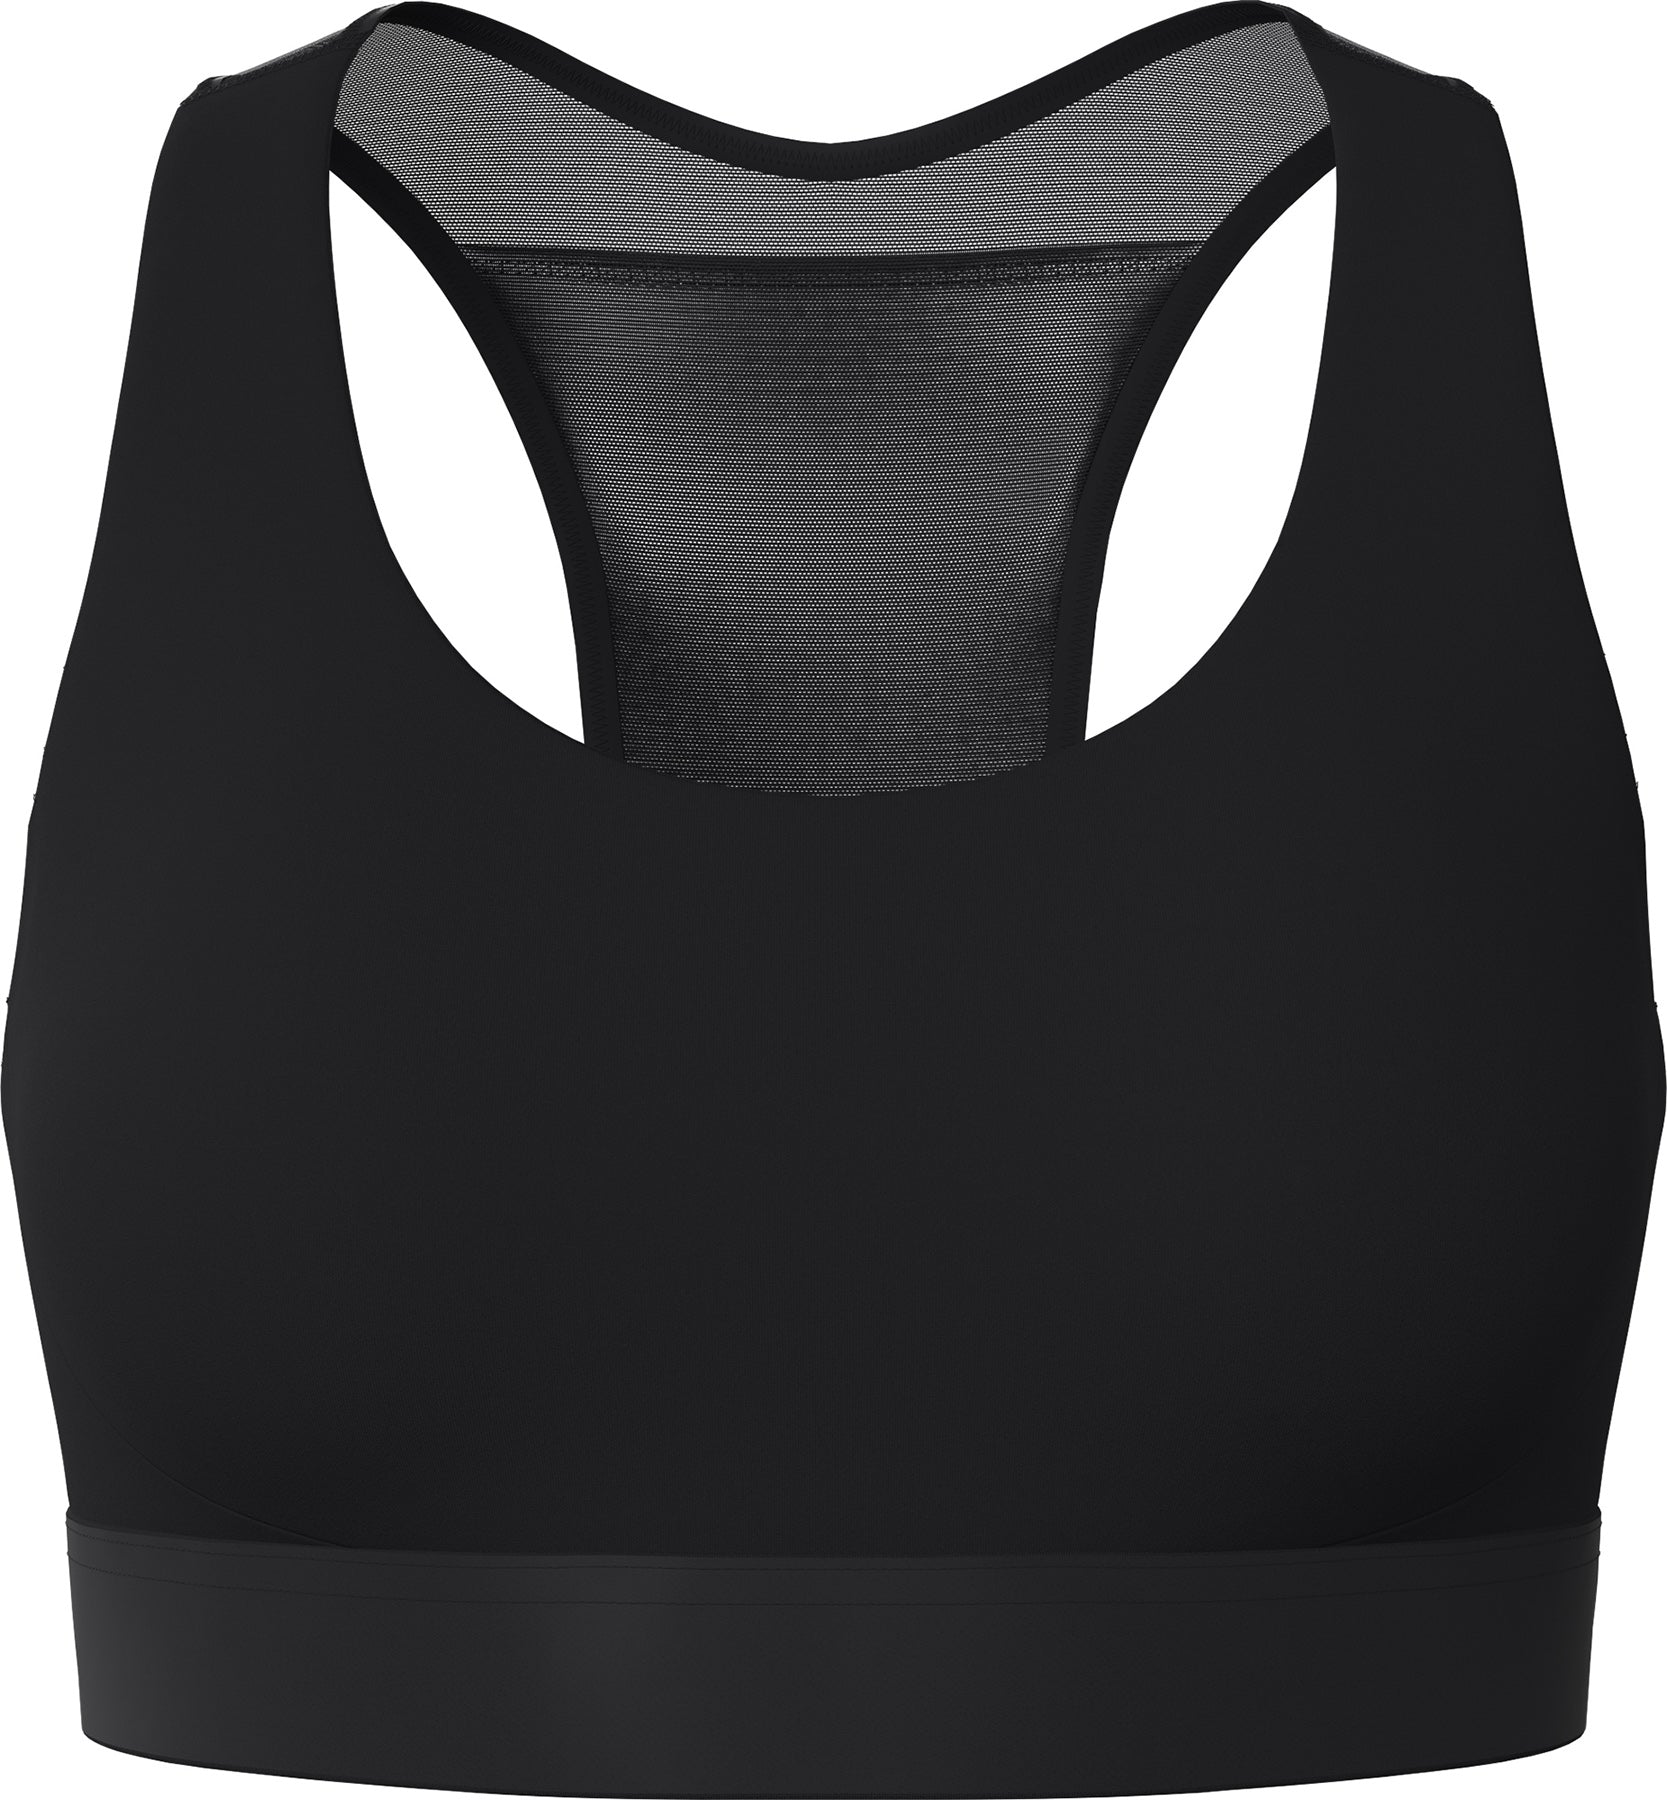 New Balance Sleek Medium Support Pocket Sports Bra 